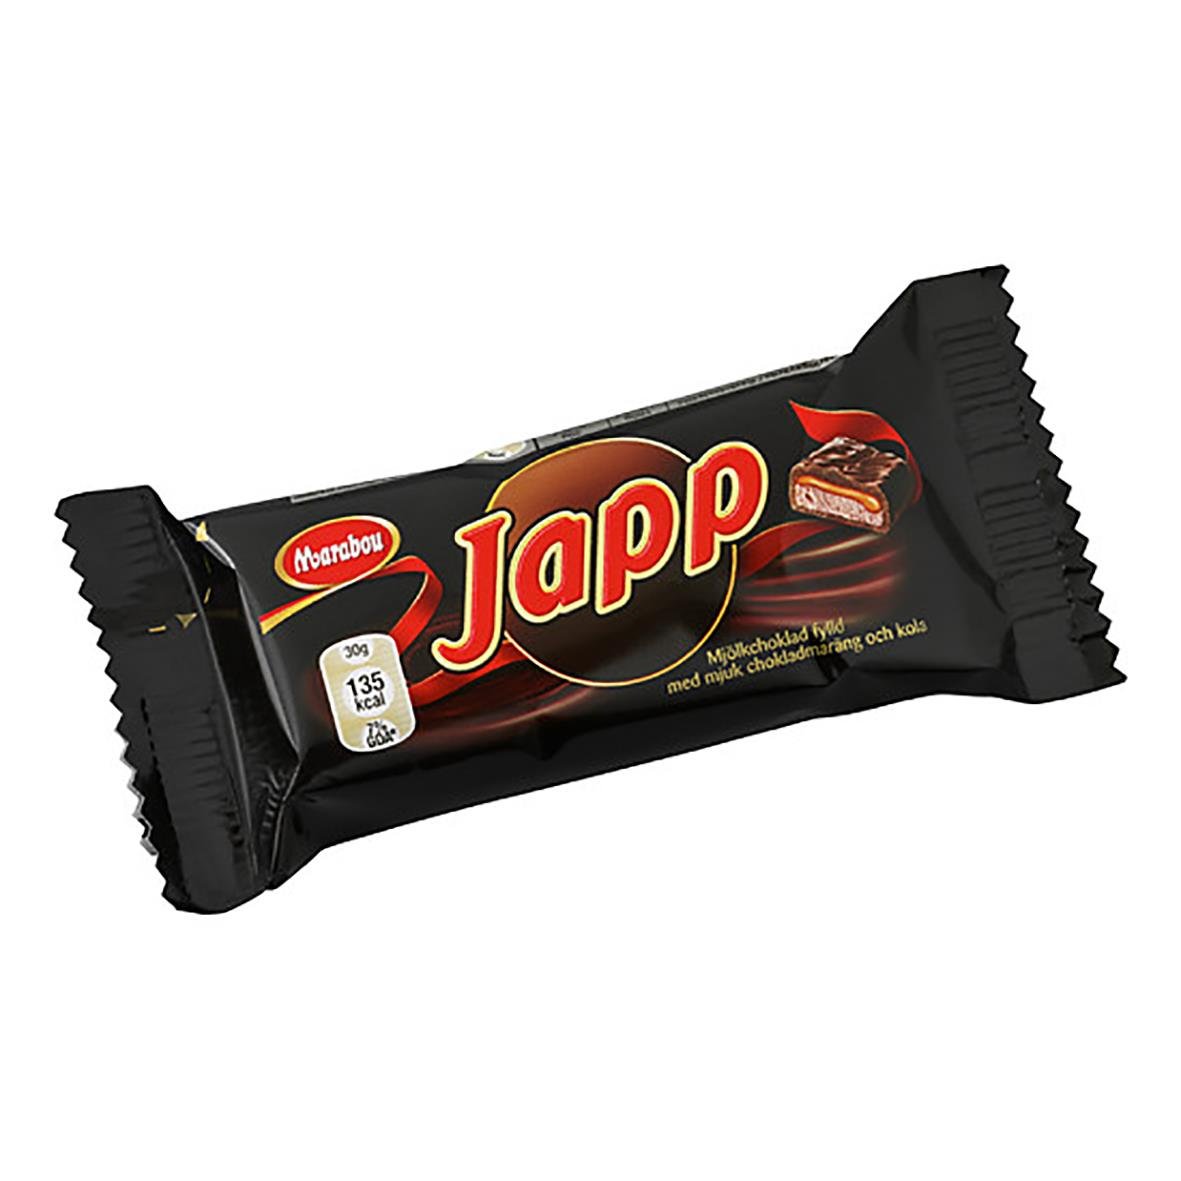 Choklad Marabou Japp single 30g